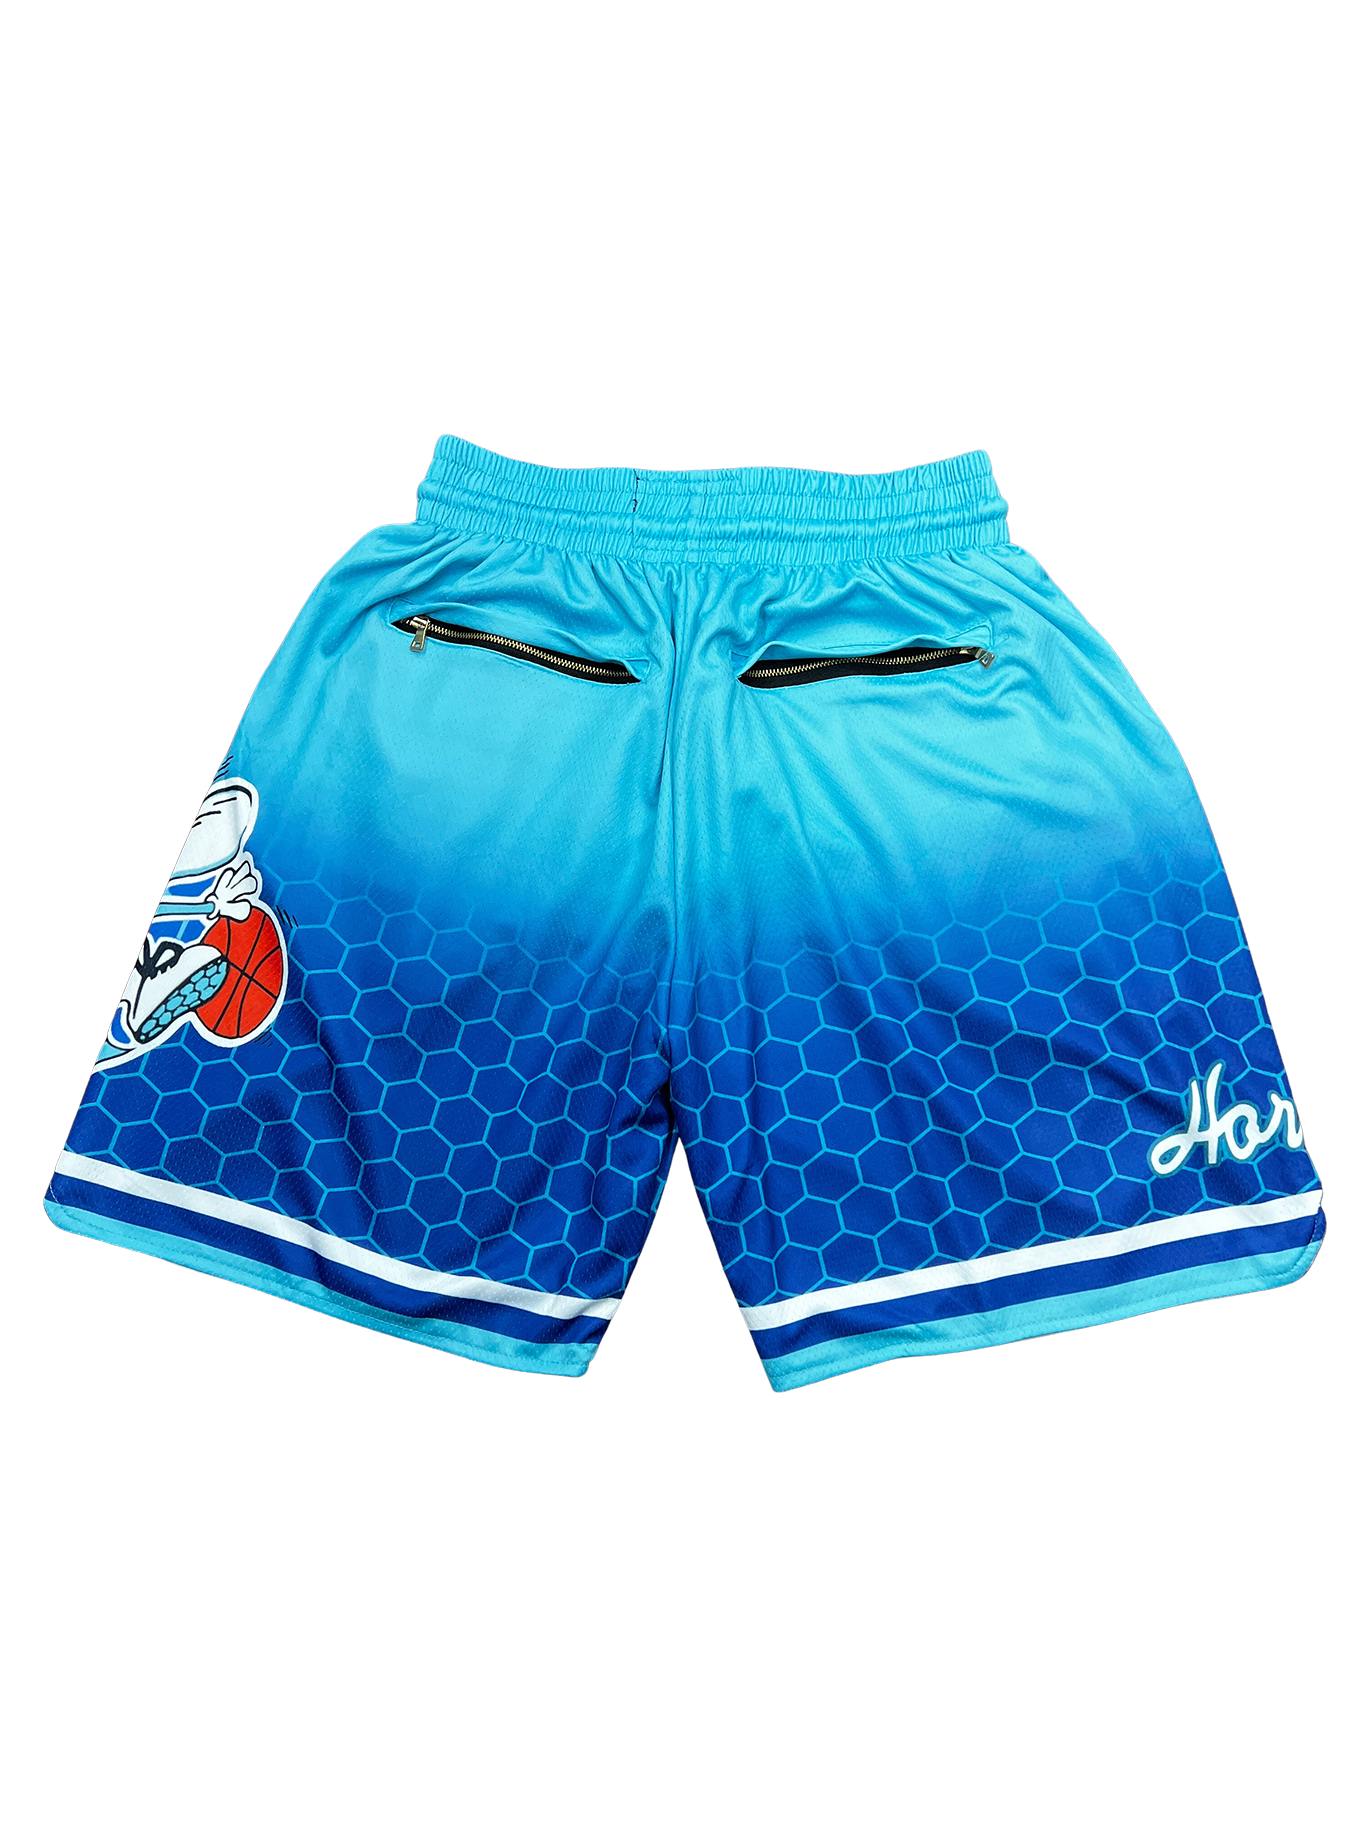 Charlotte Hornets Blue Shorts Full Embroidery